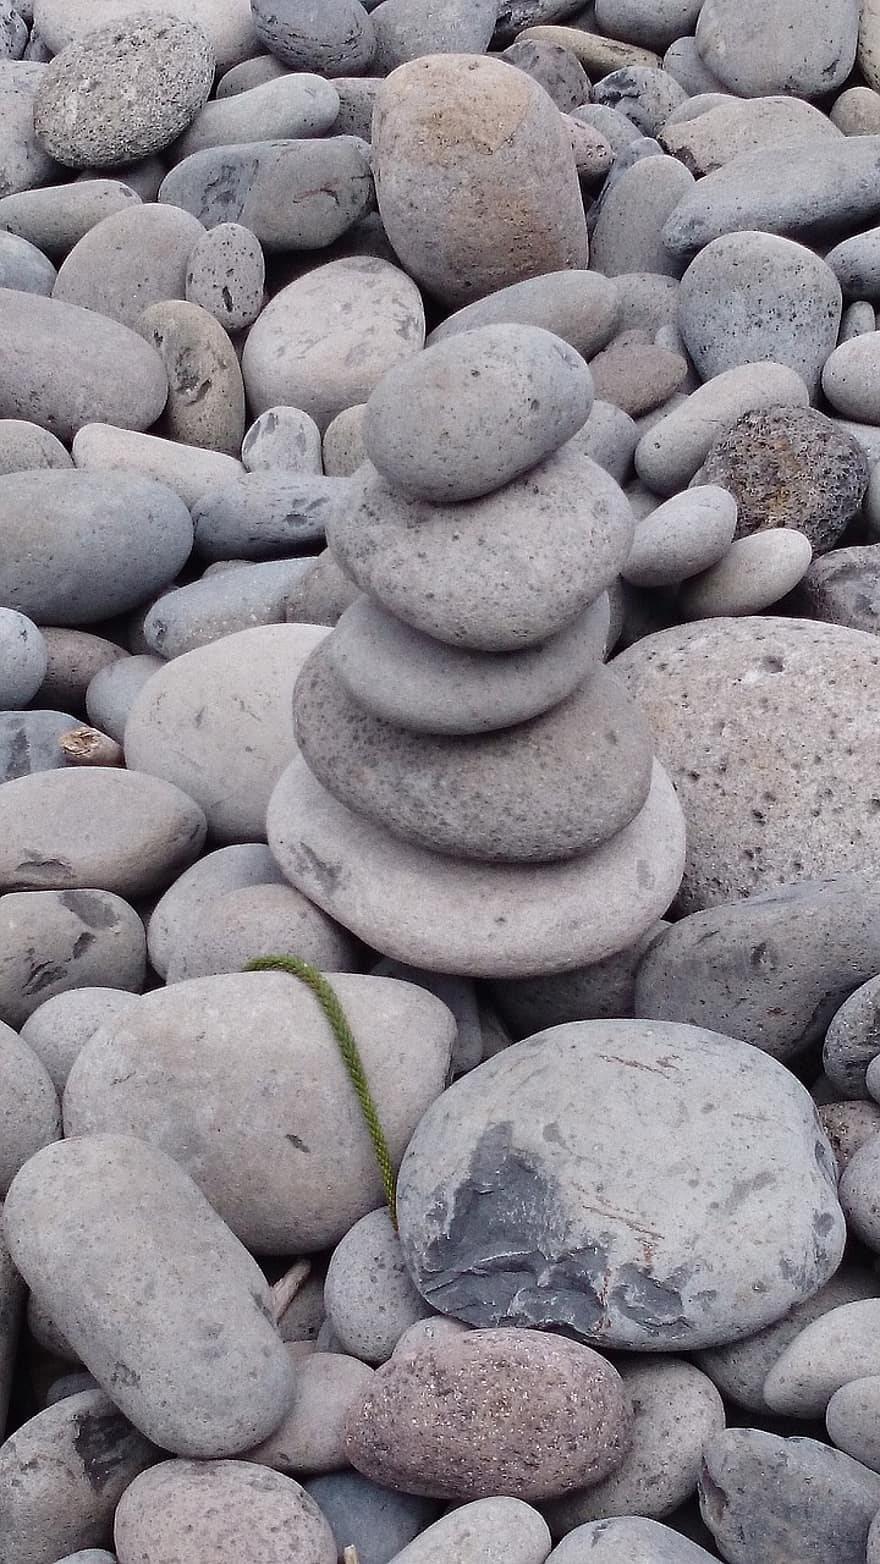 Stones, Rocks, Balance, Pebbles, Balanced Rocks, Balanced Stones, Meditation, Zen, Beach, Mindfulness, Spirituality